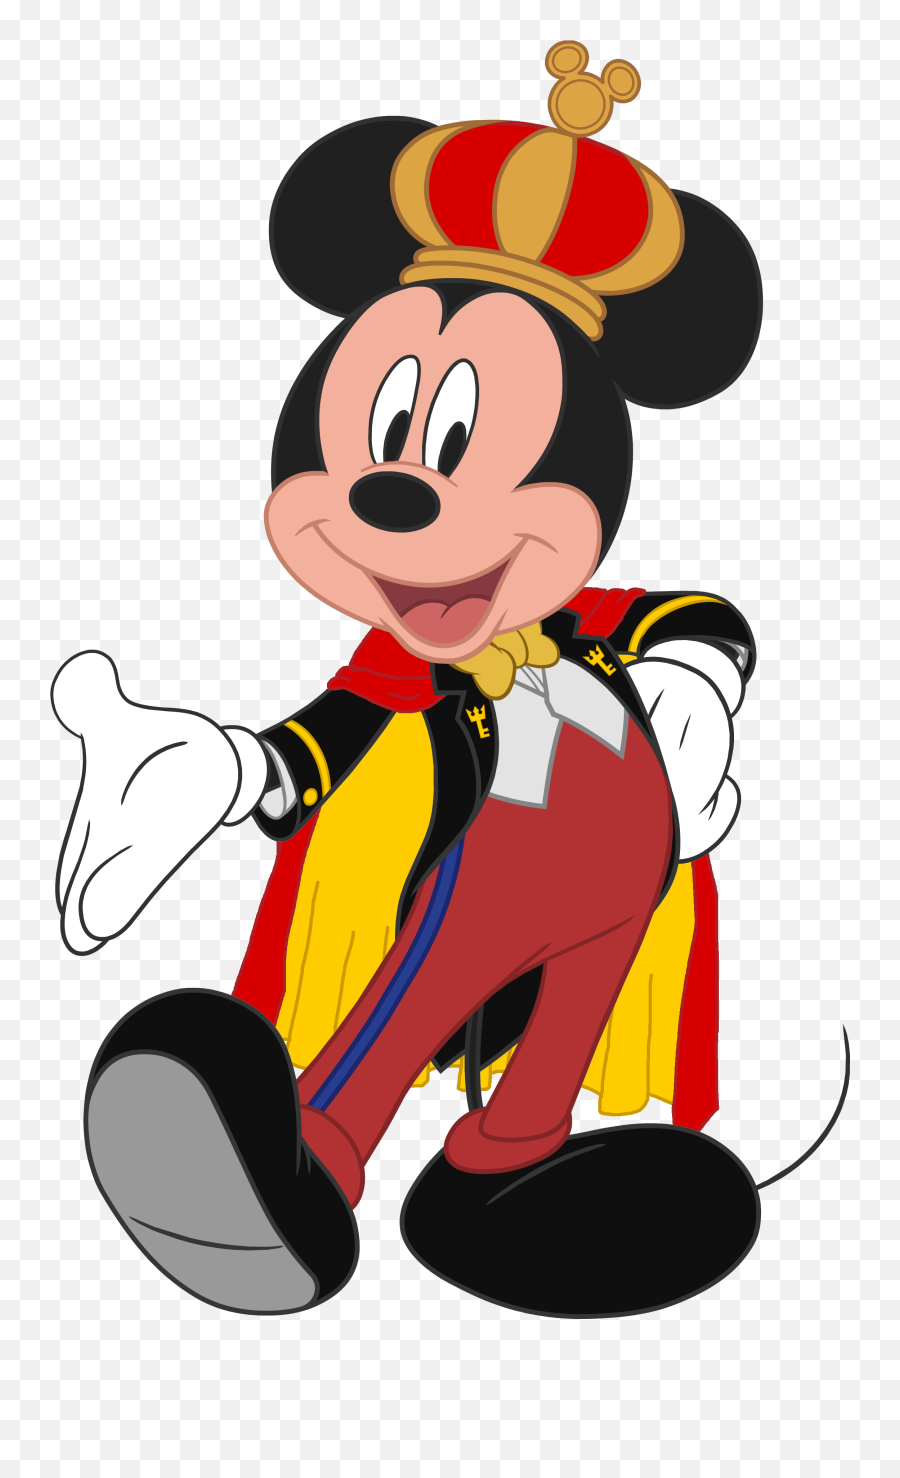 Minnie Mouse, Disney Princess Wiki